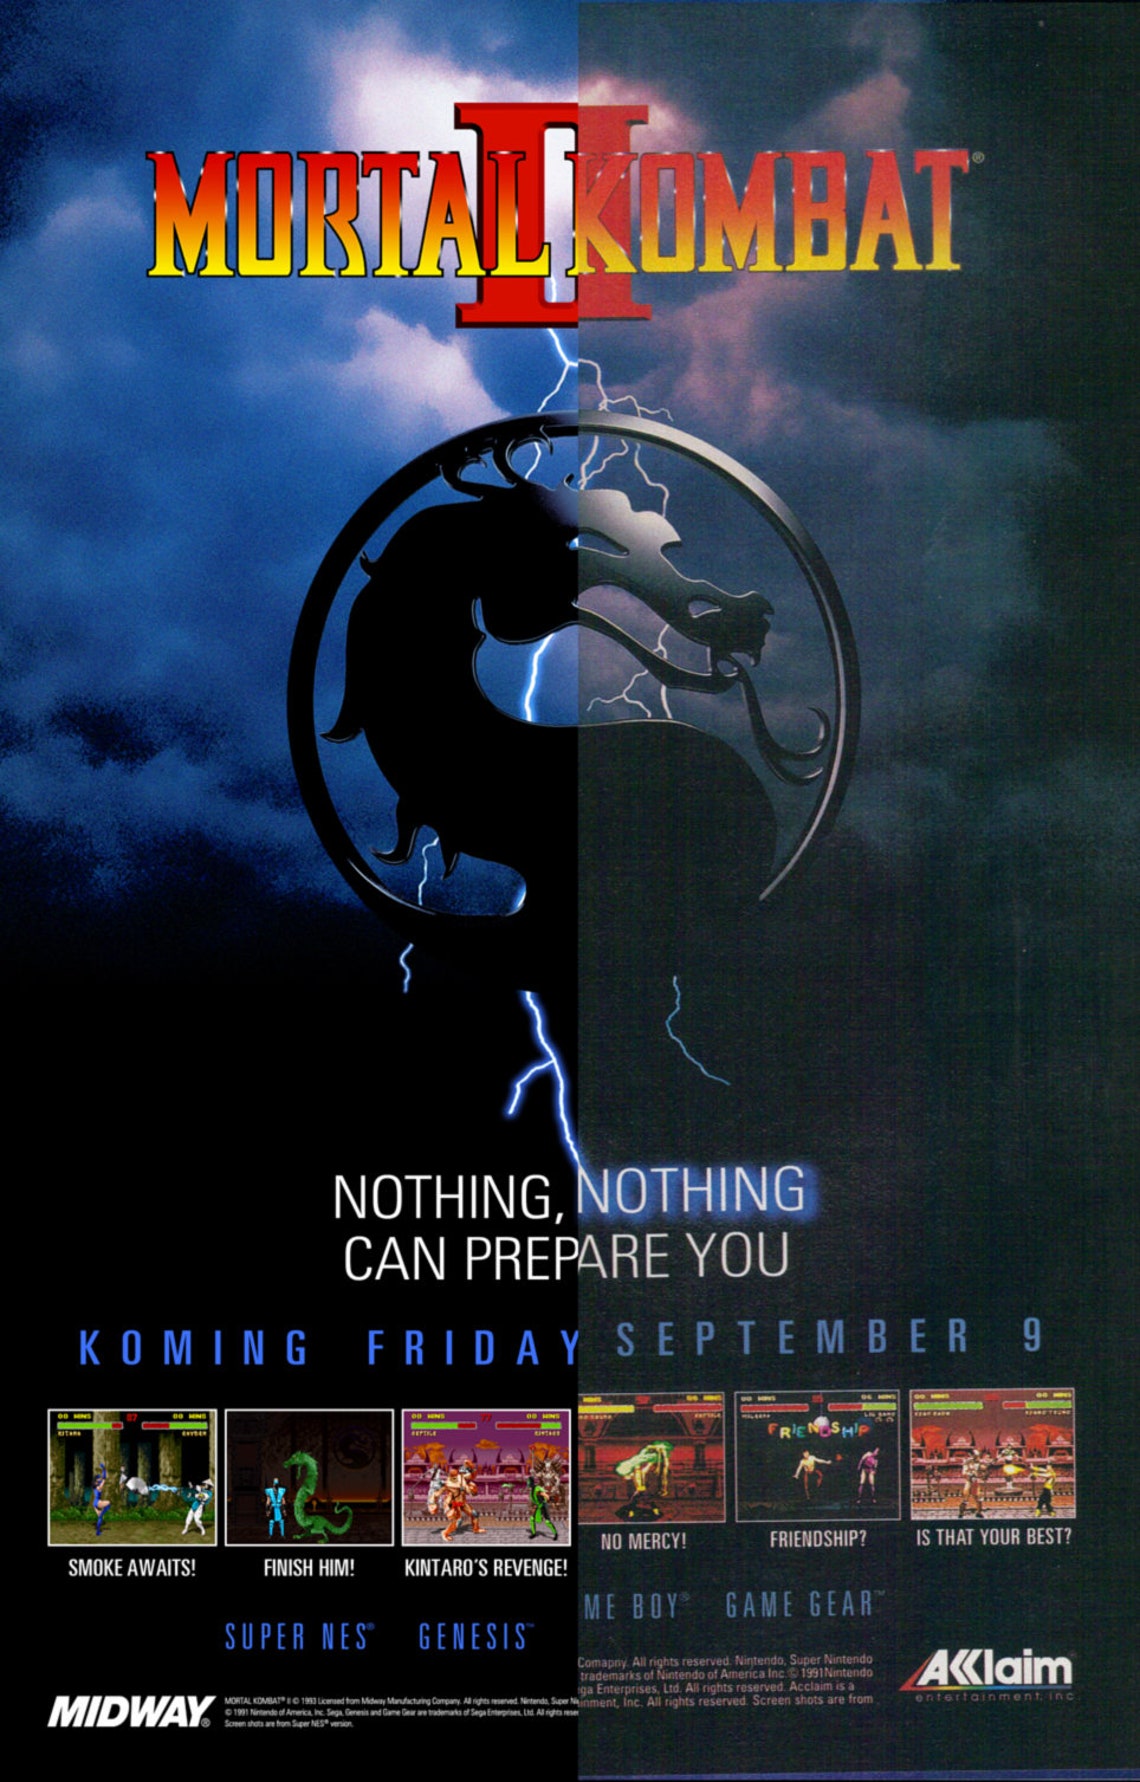 Mortal Kombat II Magazine Ad 1994 24x36 Poster. | Etsy